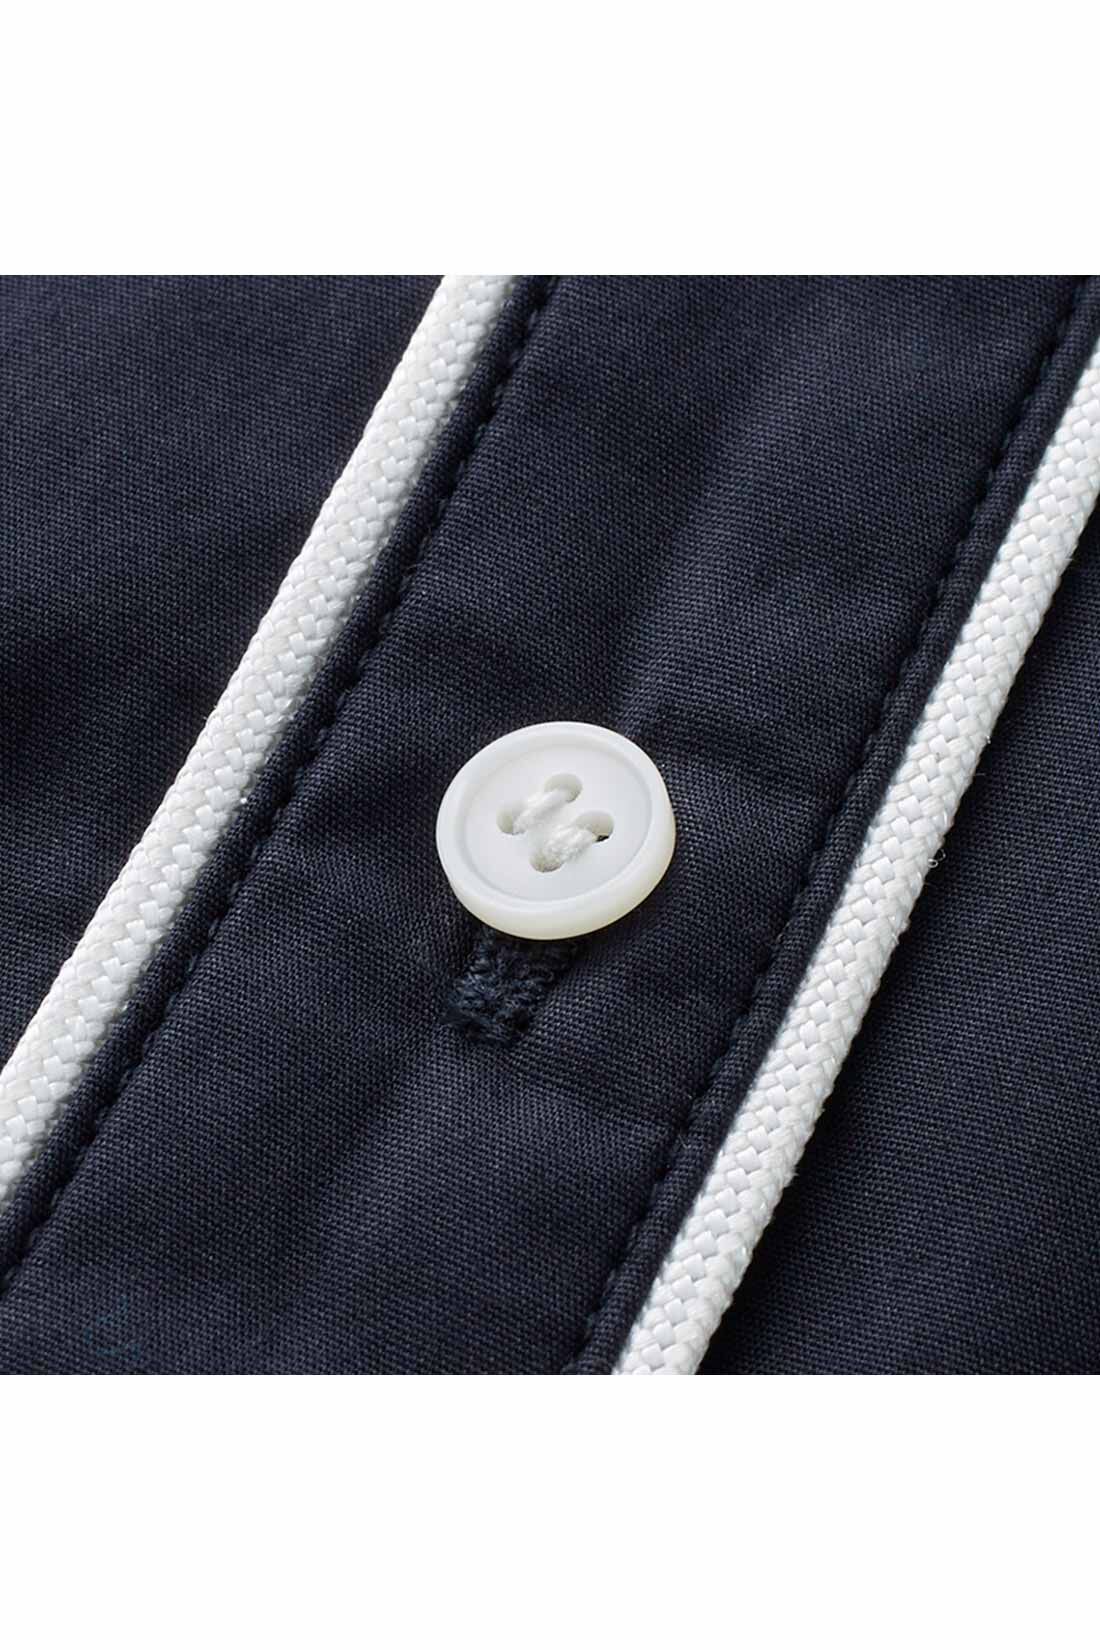 IEDIT|IEDIT[イディット]　コーデのポイントになる きれいめパイピングシャツ〈ネイビー〉|白いパイピングテープとボタンが、清潔感＆華やかなアクセントに。